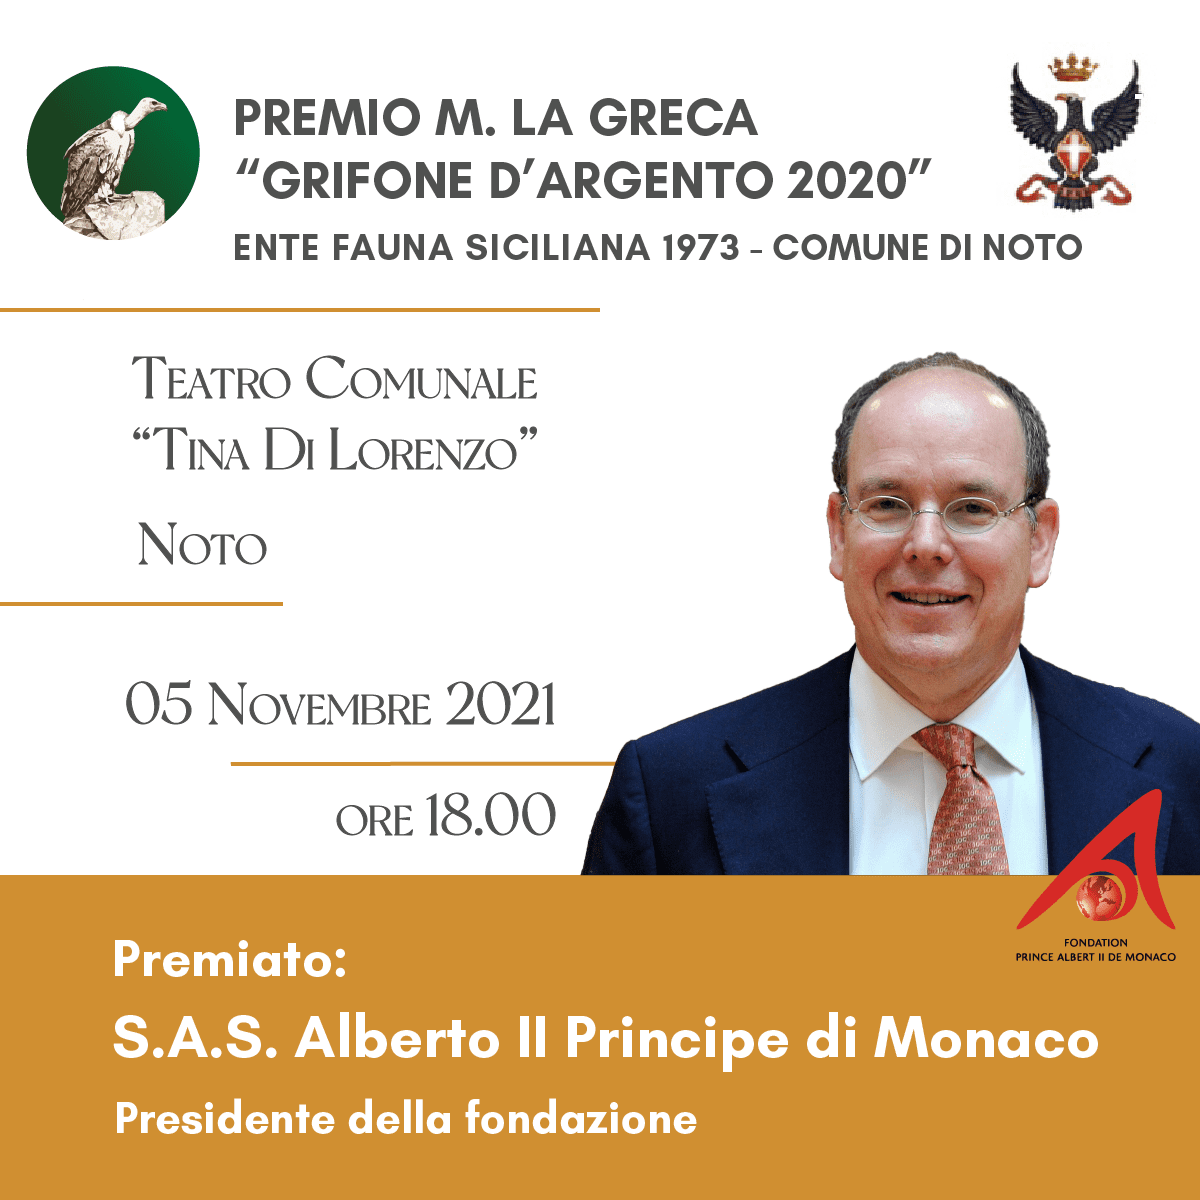 Premio M. La Greca 2020 a S.A.S. Albert II Prince de Monaco